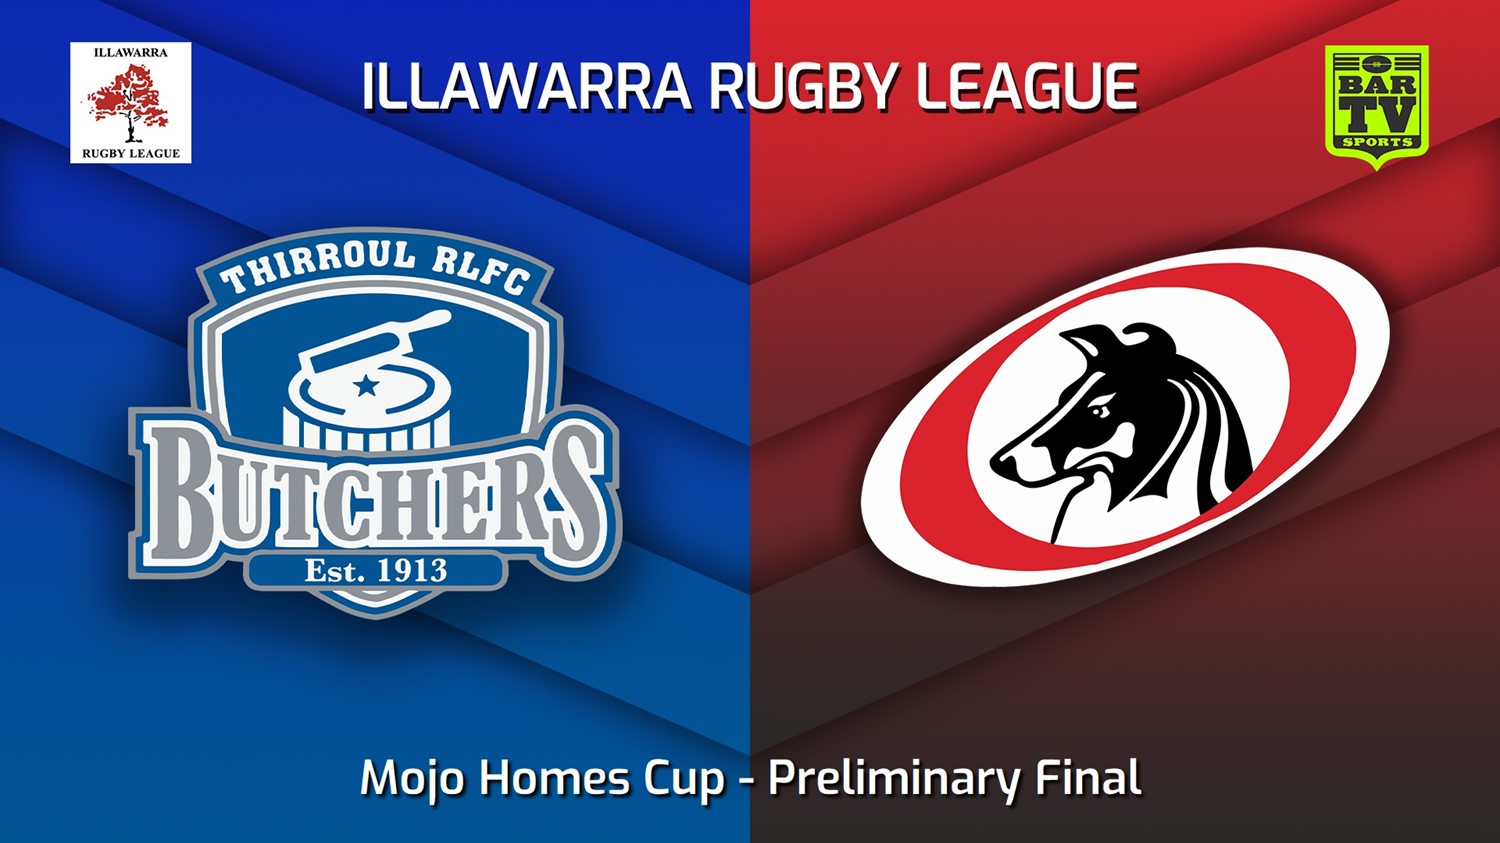 220827-Illawarra Preliminary Final - Mojo Homes Cup - Thirroul Butchers v Collegians Minigame Slate Image